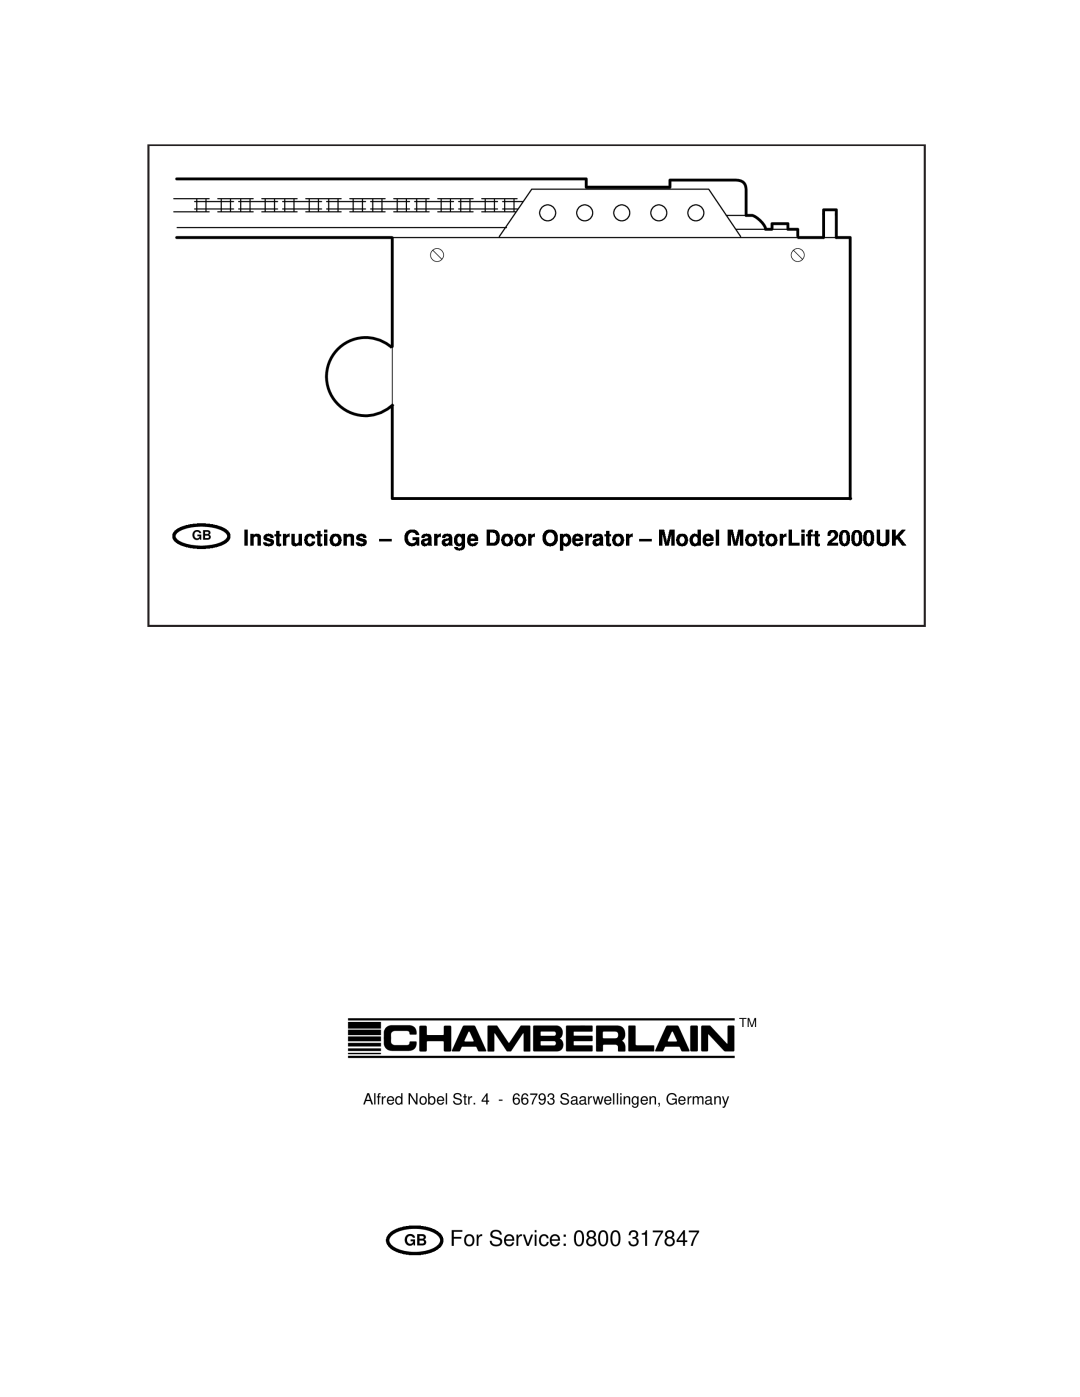 Chamberlain manual Instructions - Garage Door Operator - Model MotorLift 2000UK, GB For Service 